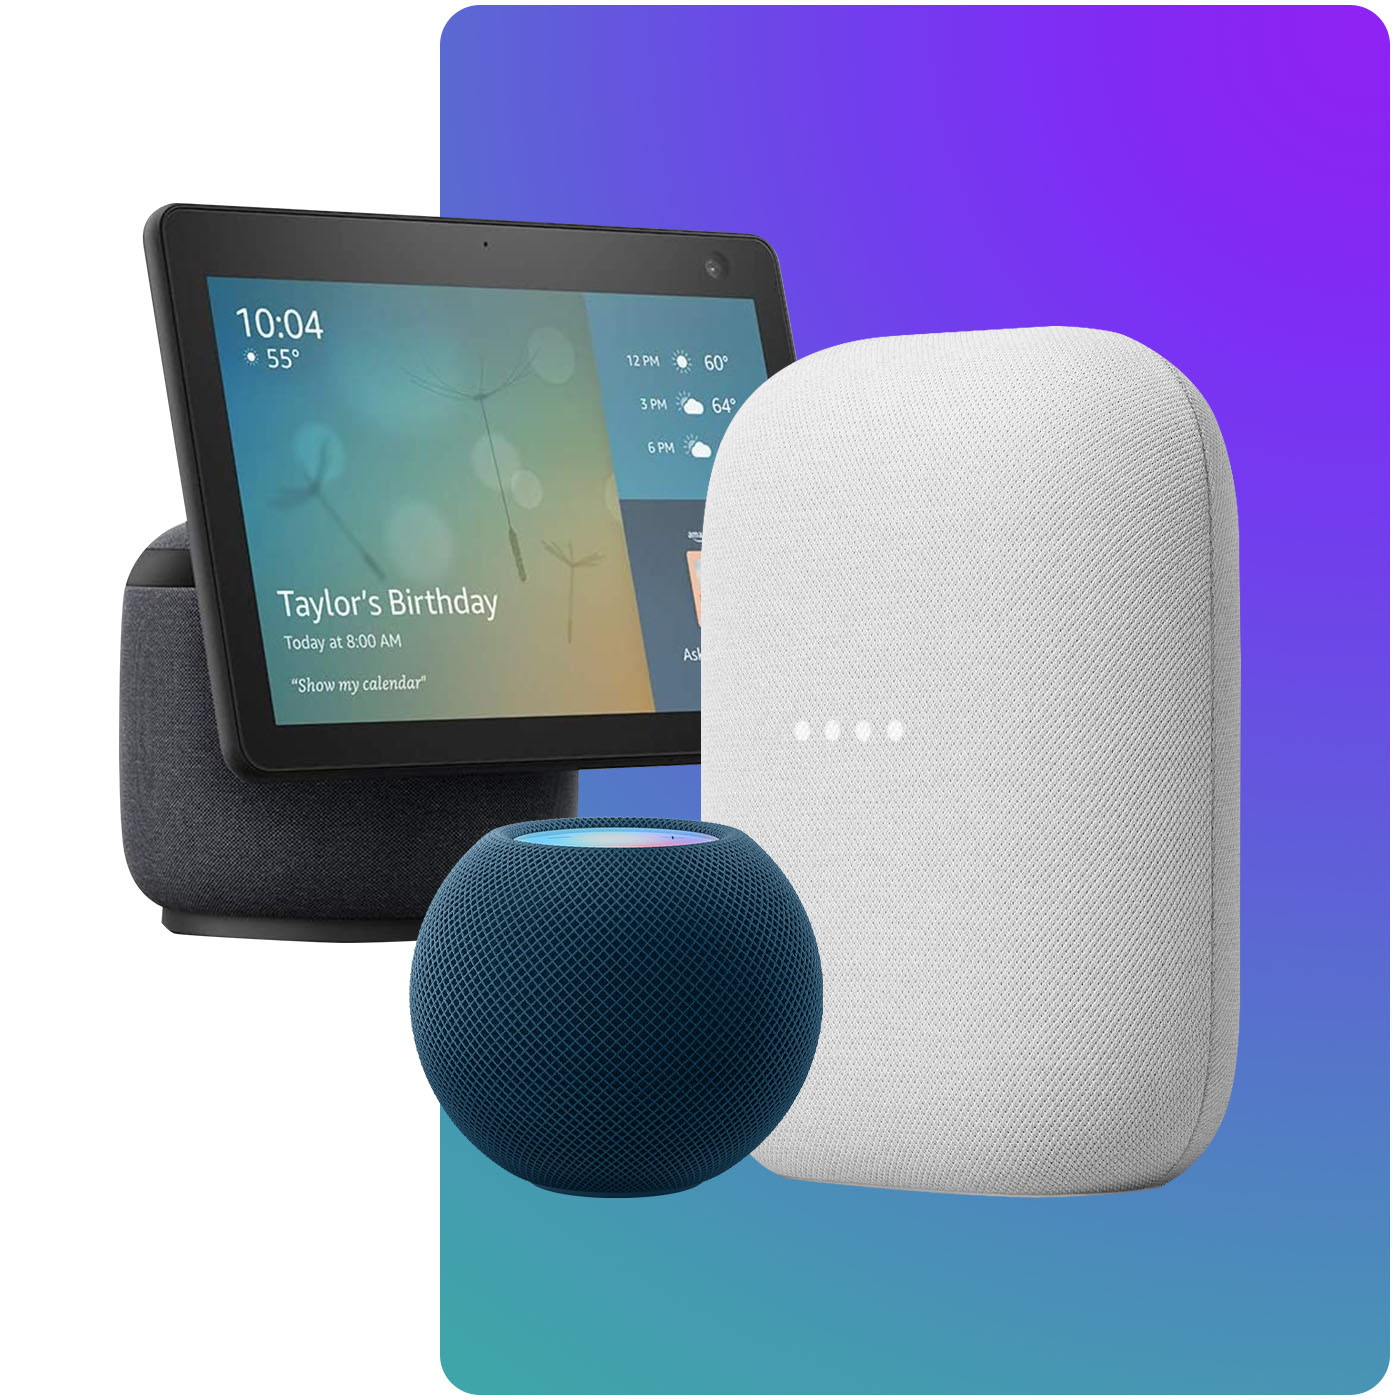 freedompro connected smart relays and bridges work with voice speakers apple homekit, google assistant, alexa